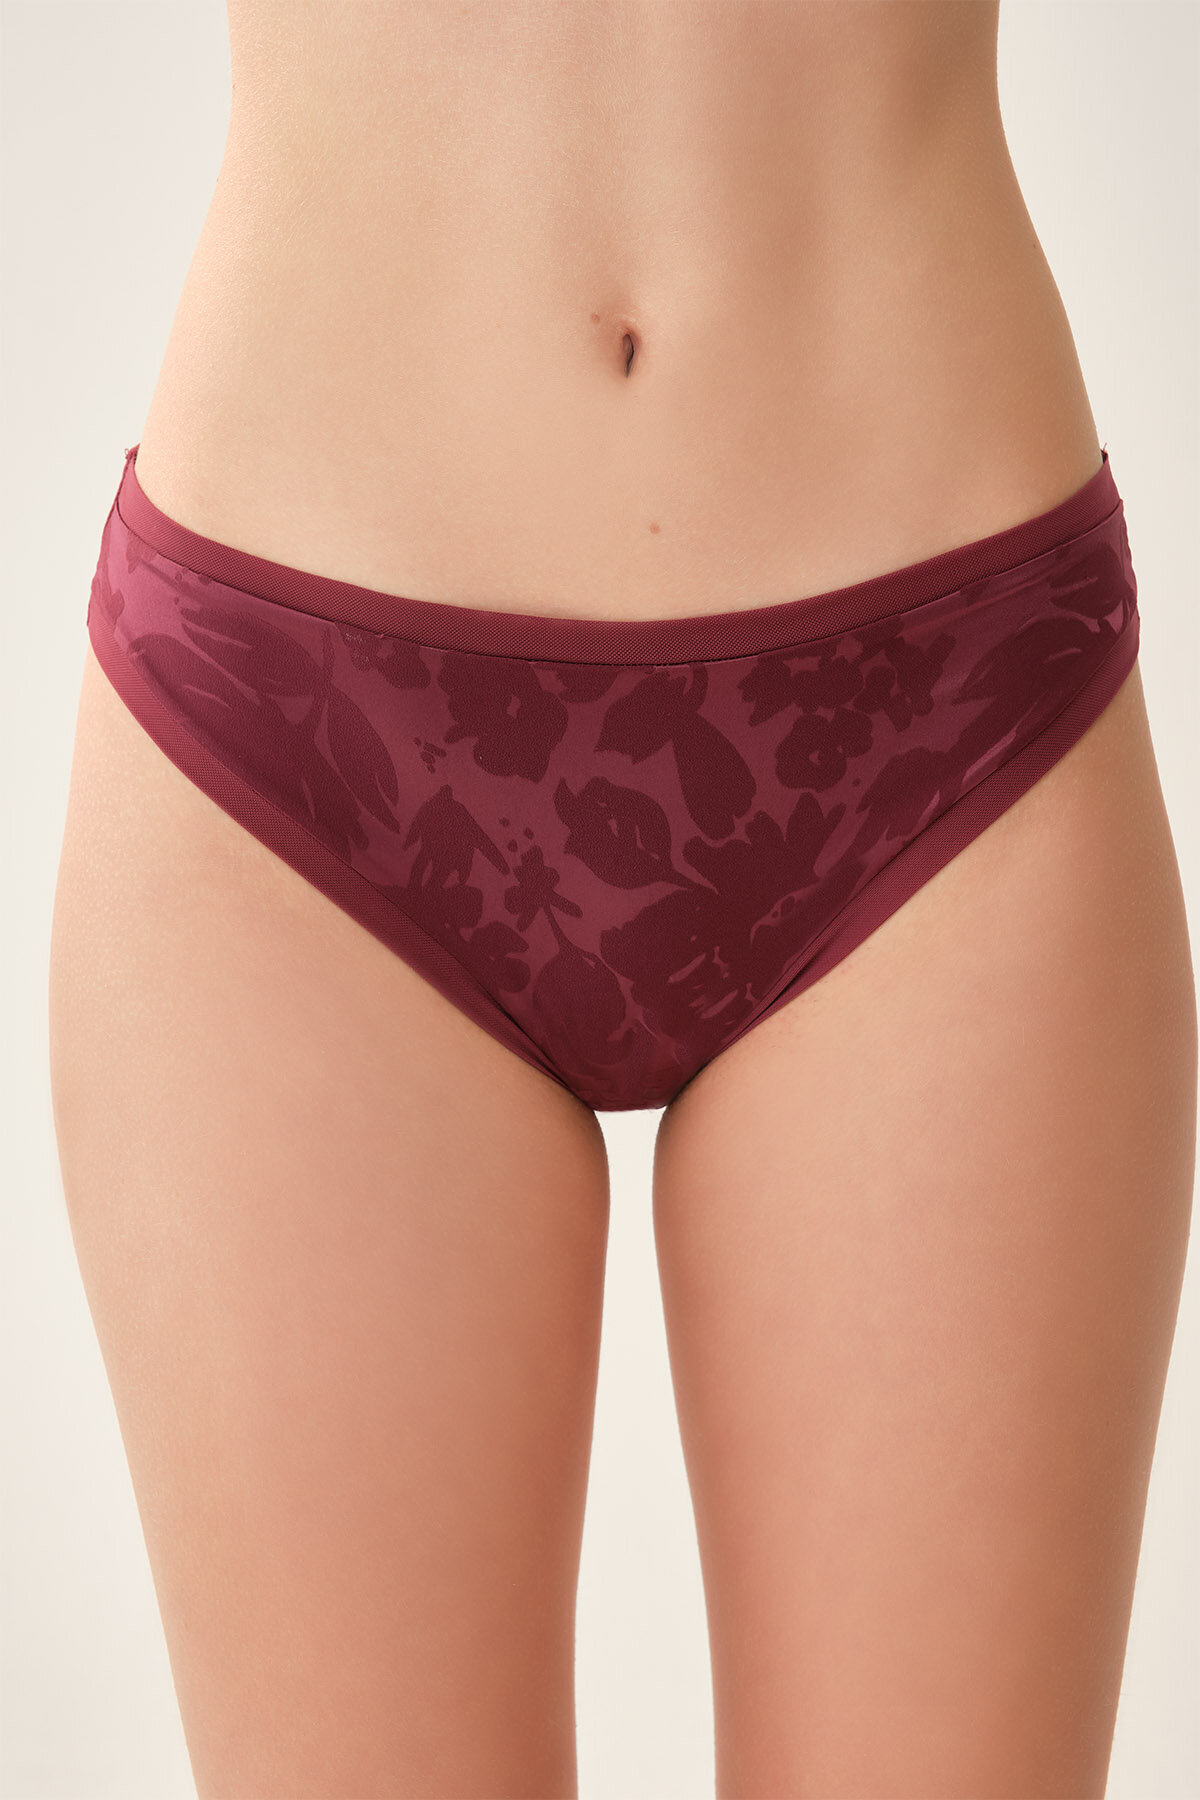 DAGİ Bordeaux Brazillian Slip, Animal Print, Normal Fit, Underwear for Women